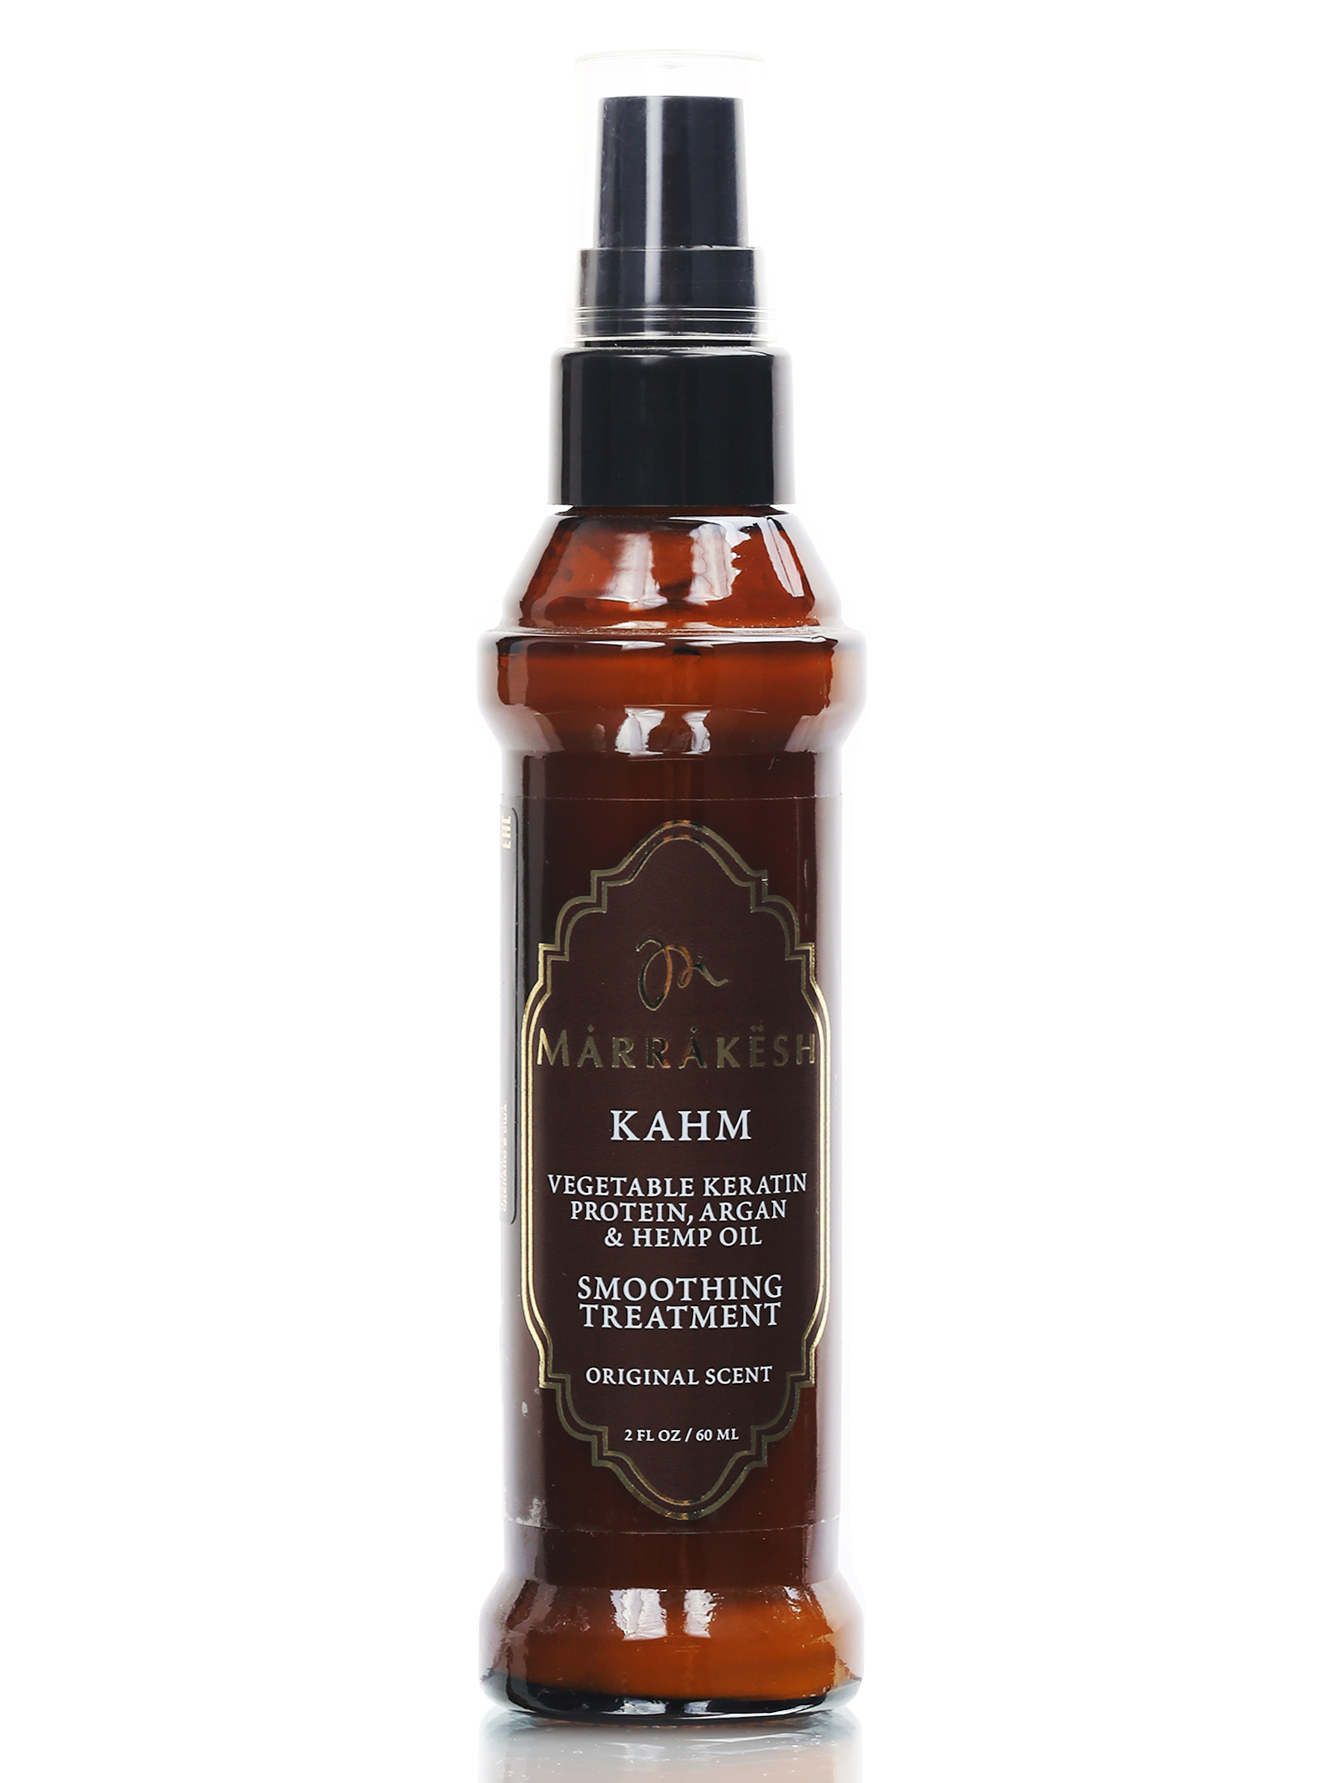  Сыворотка для волос - Kahm, Hair Care, 60ml - Общий вид